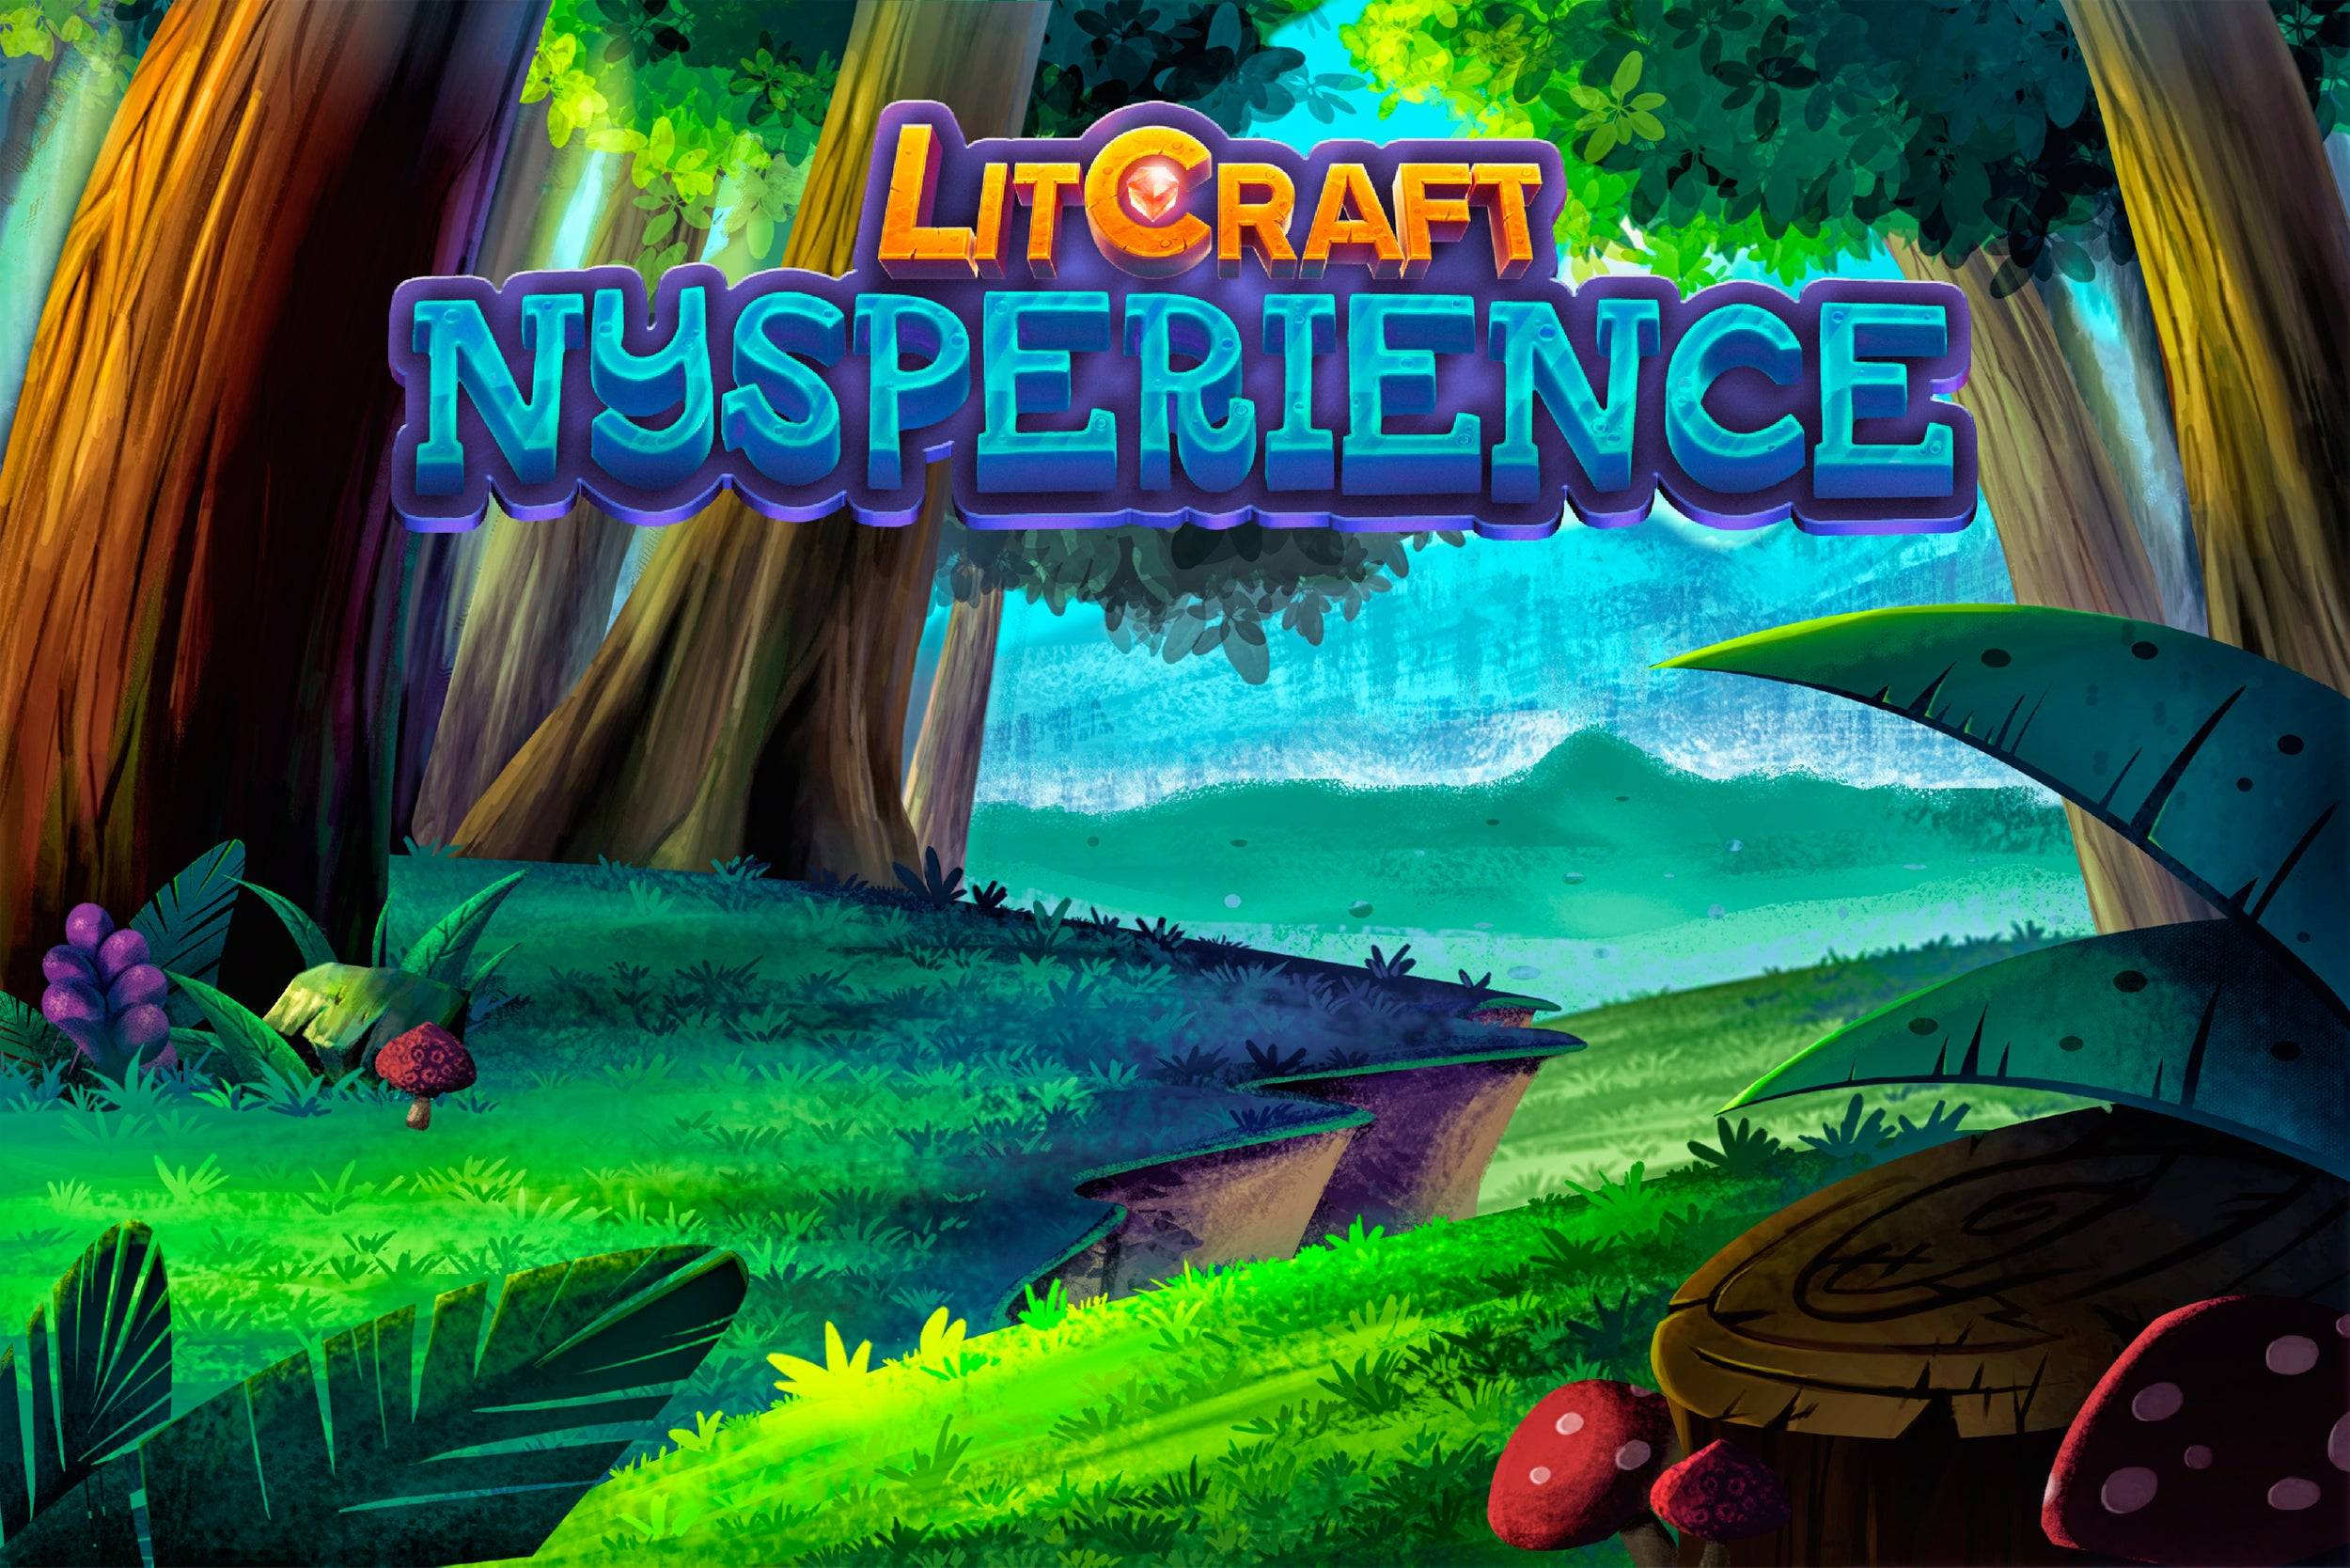 LitCraft: Nysperience - Revisão do jogo